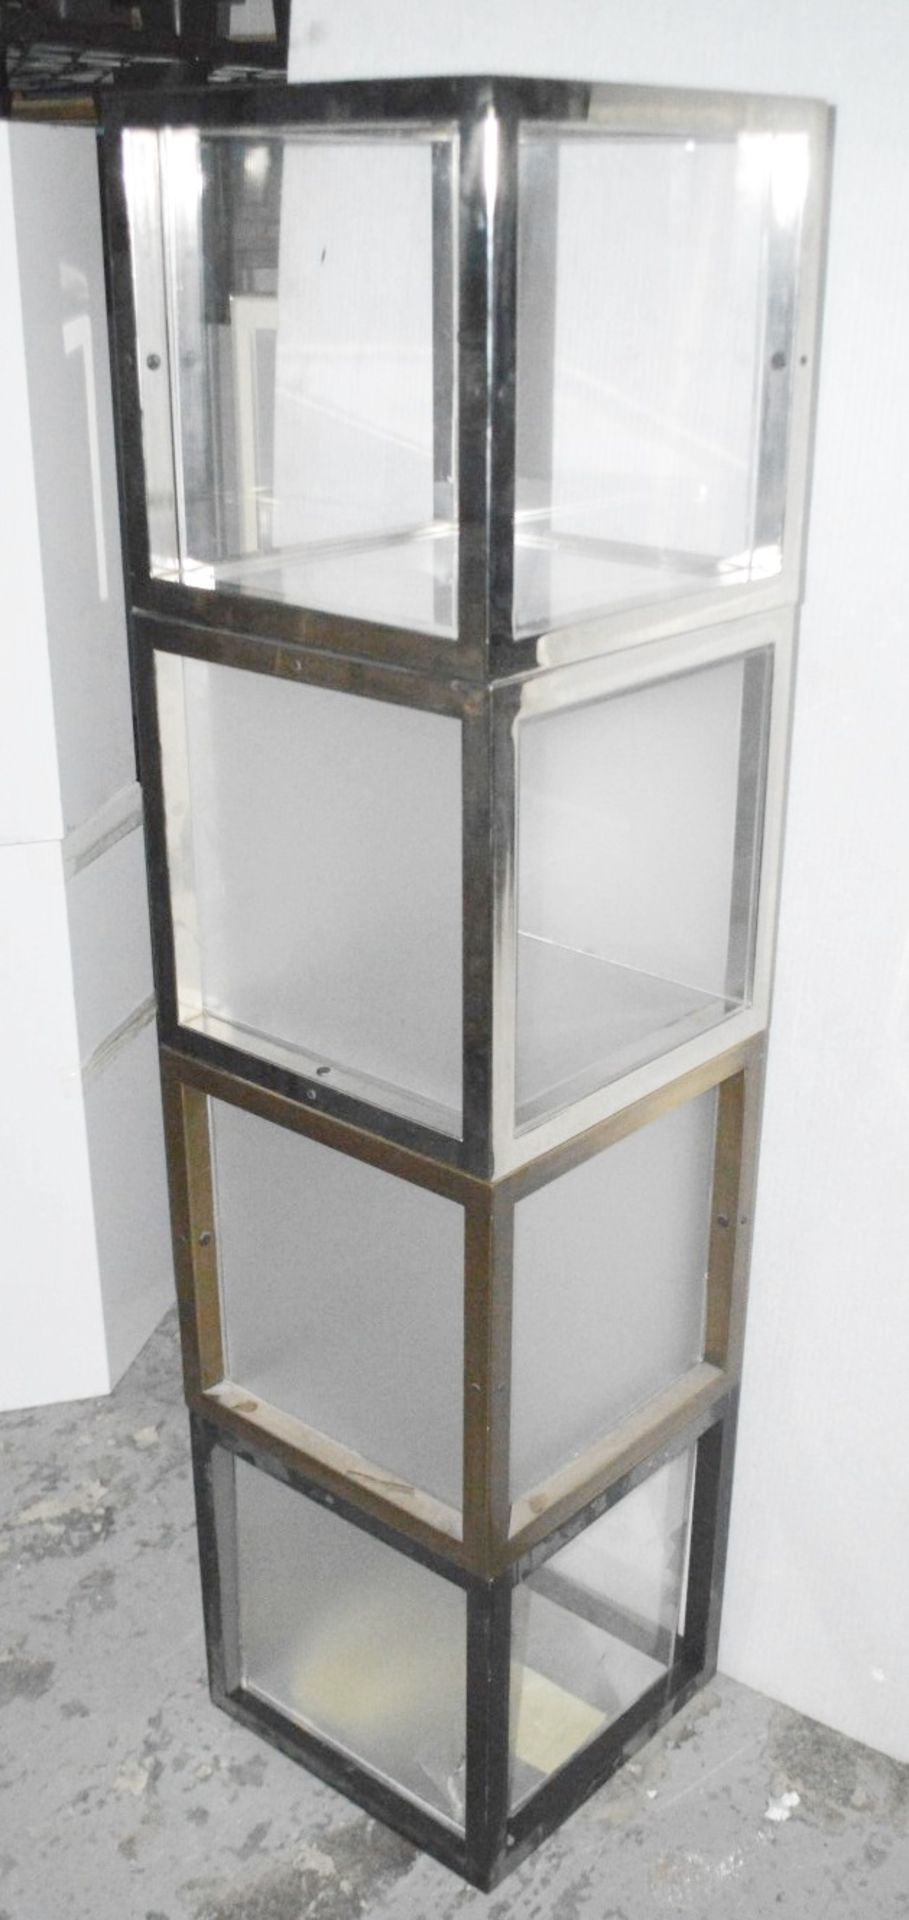 4 x Metal And Plexiglass Display Boxes - Ex-Showroom Pieces - Each Measures: H40 x W40 x D40cm -